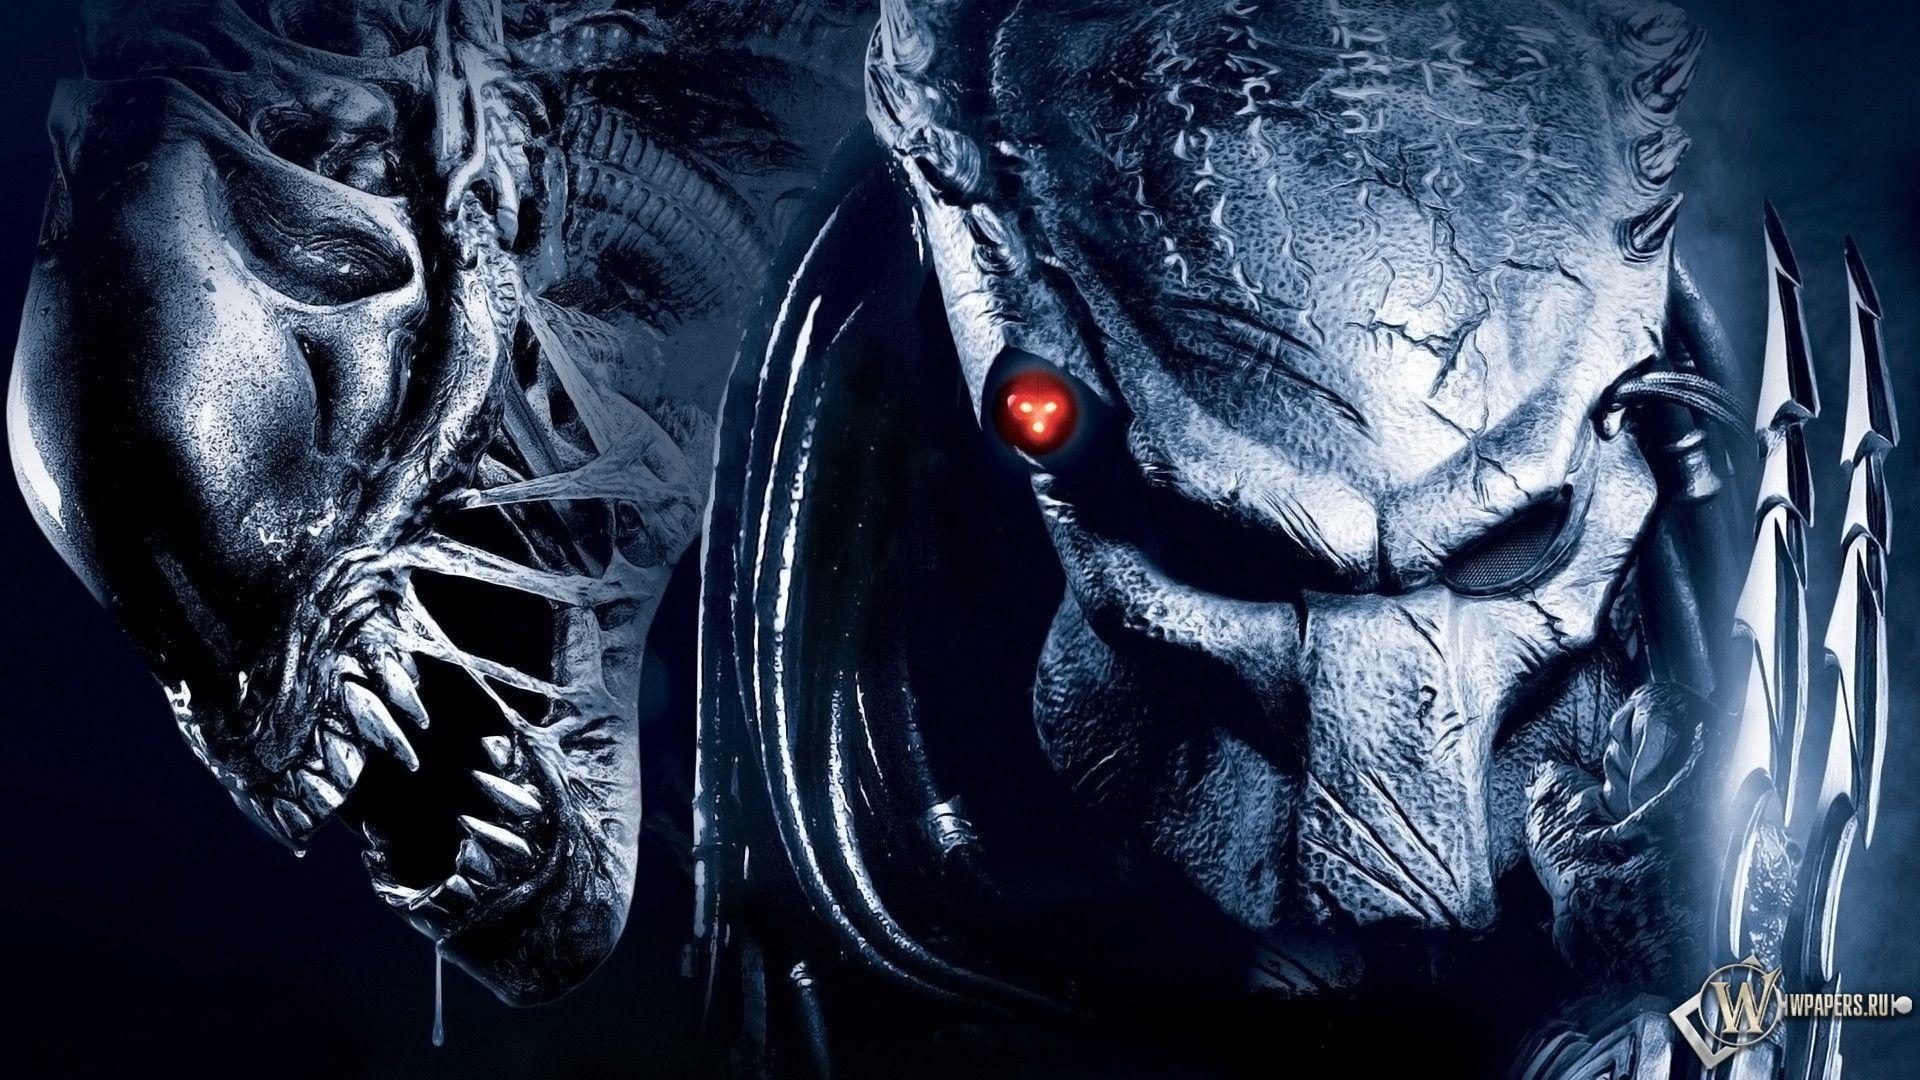 Cool Alien vs Predator Wallpapers on WallpaperDog